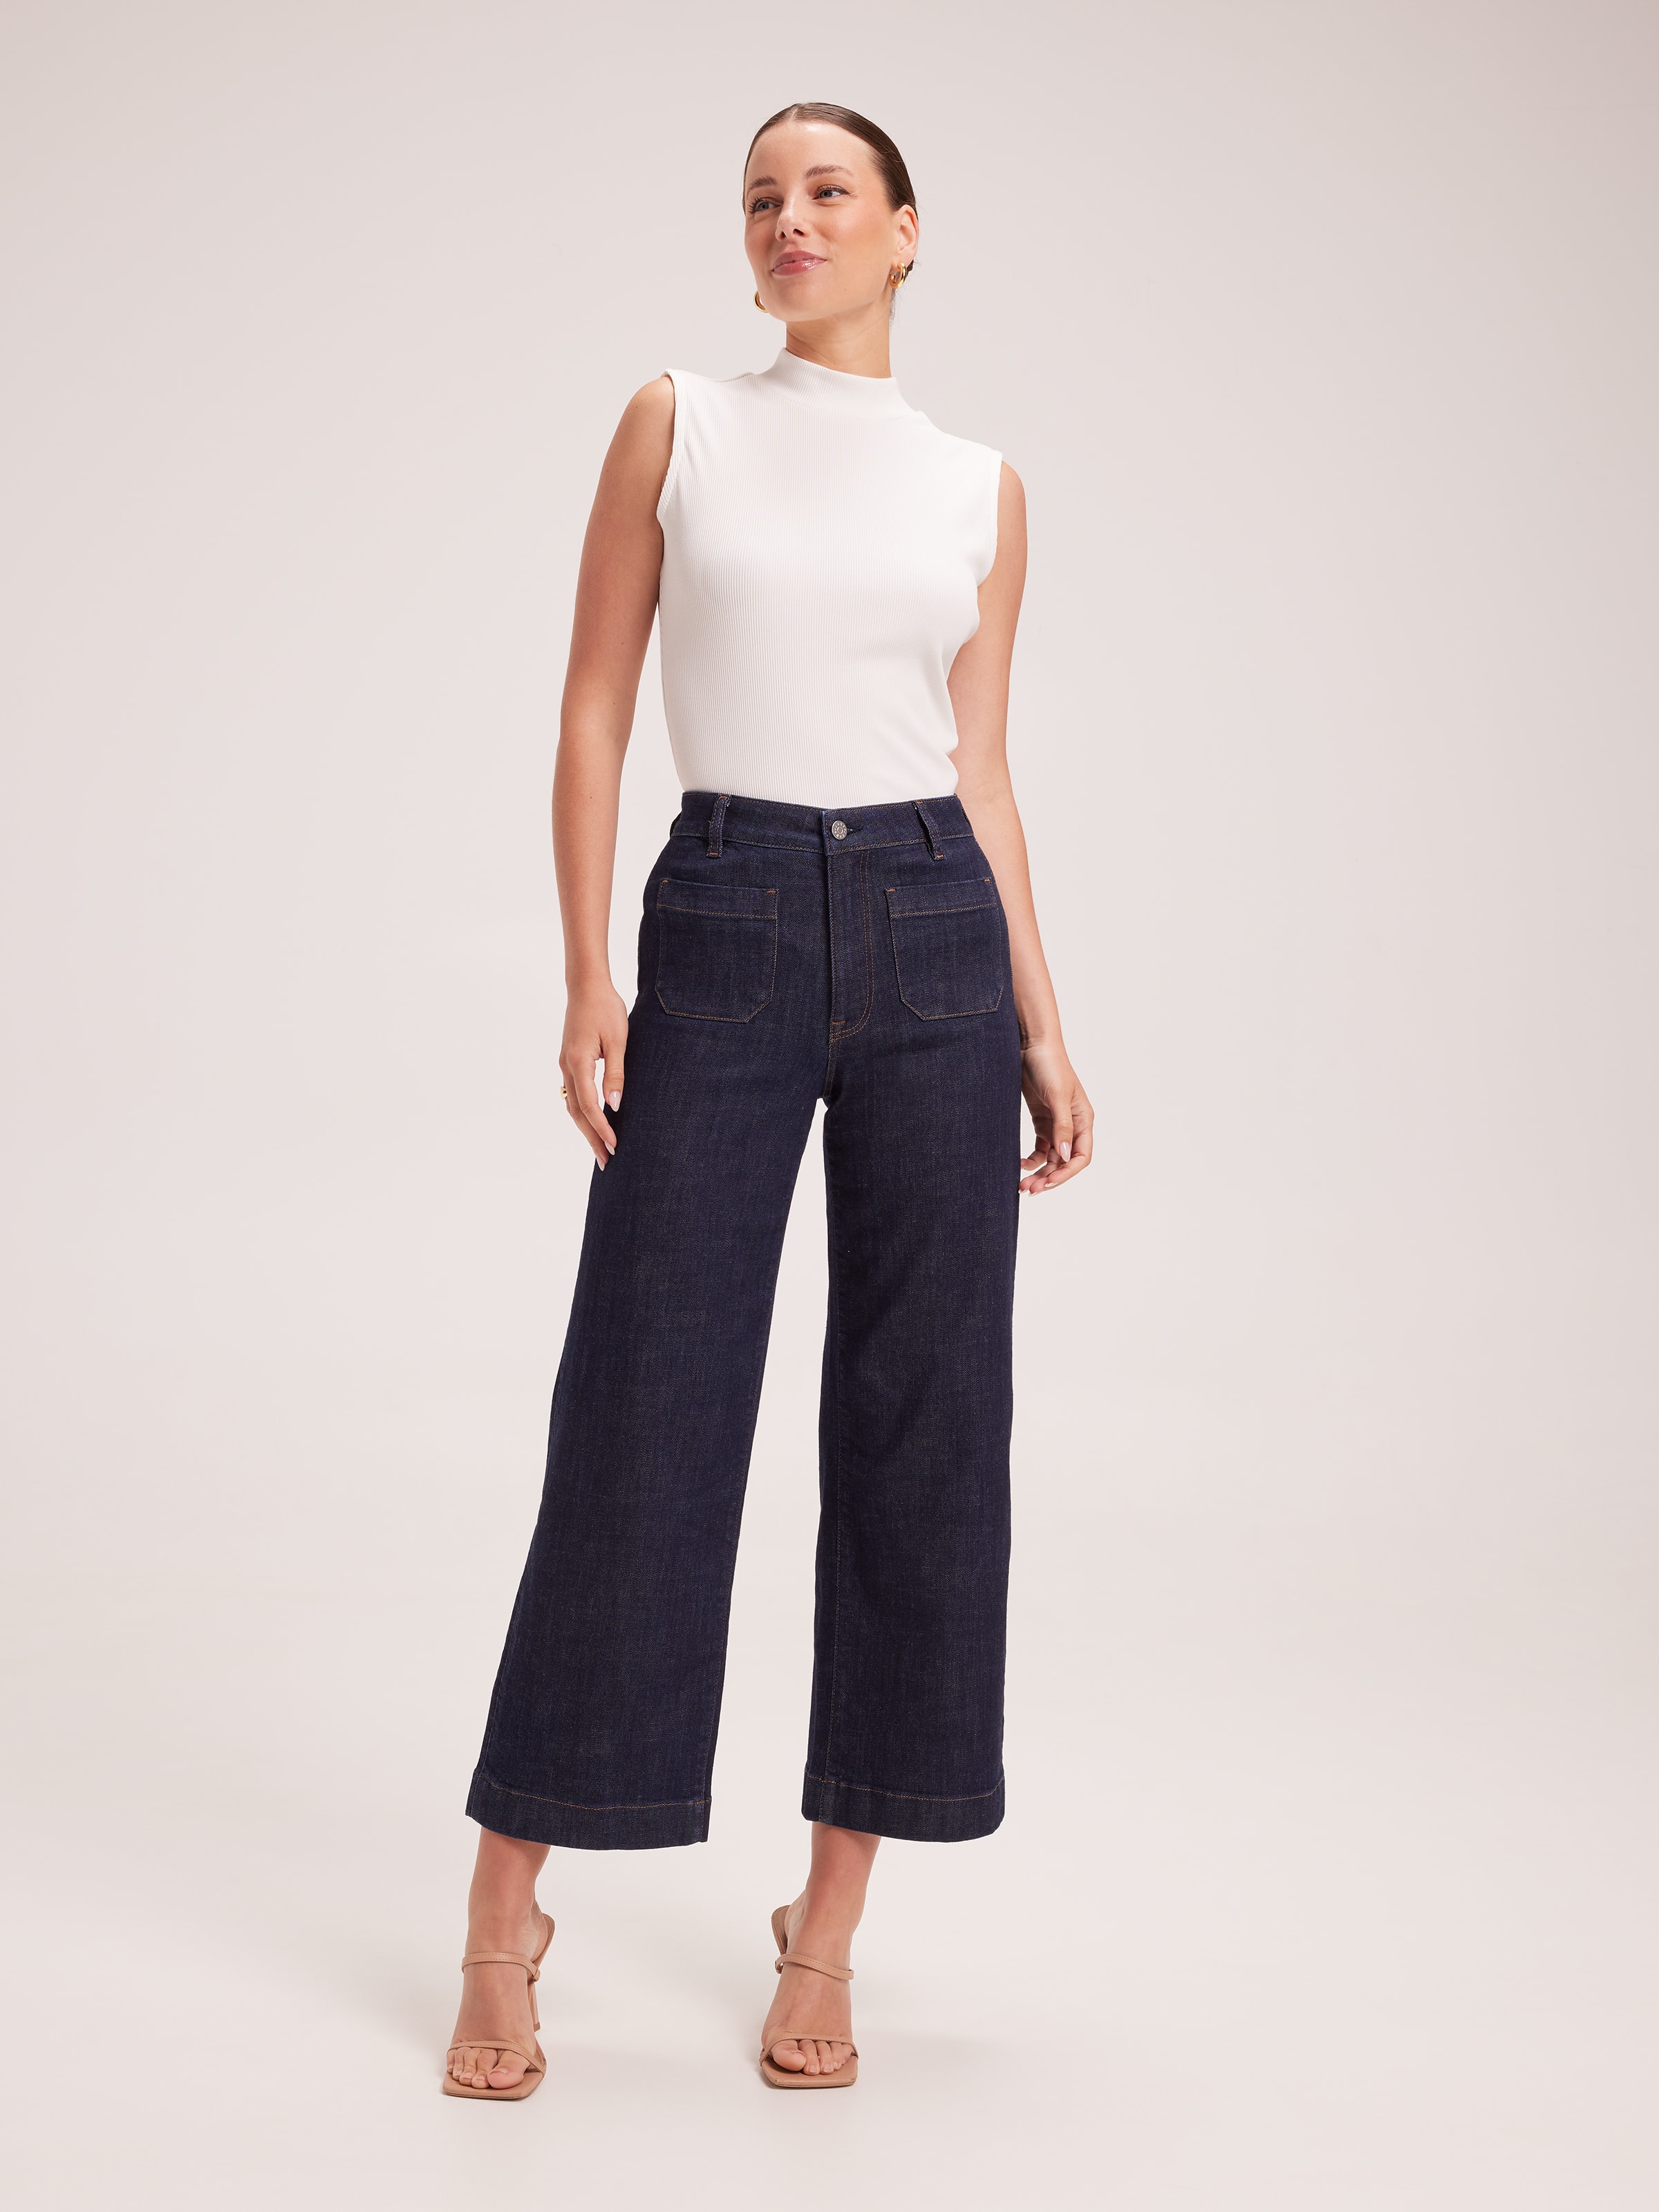 WOMEM Flowy Pants For Women, High waist leggings women's summer trousers  imitation jeans hip thin capris women's clothing (Color : Blue, Size : M)  price in Saudi Arabia,  Saudi Arabia